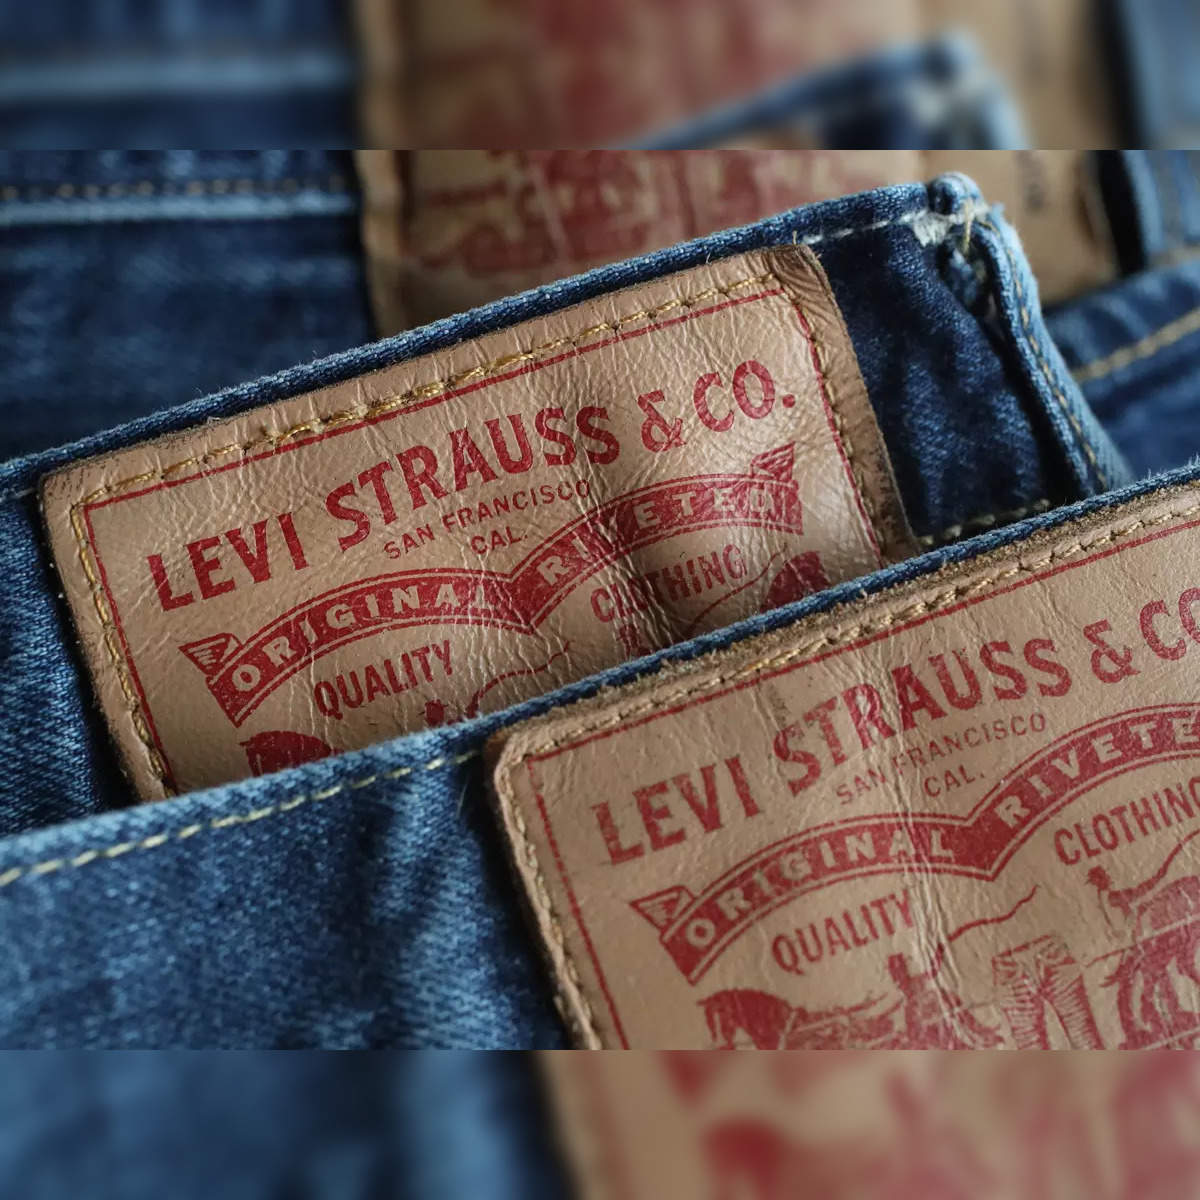 Jeans Labels at Best Price in New Delhi, Jeans Labels Manufacturer